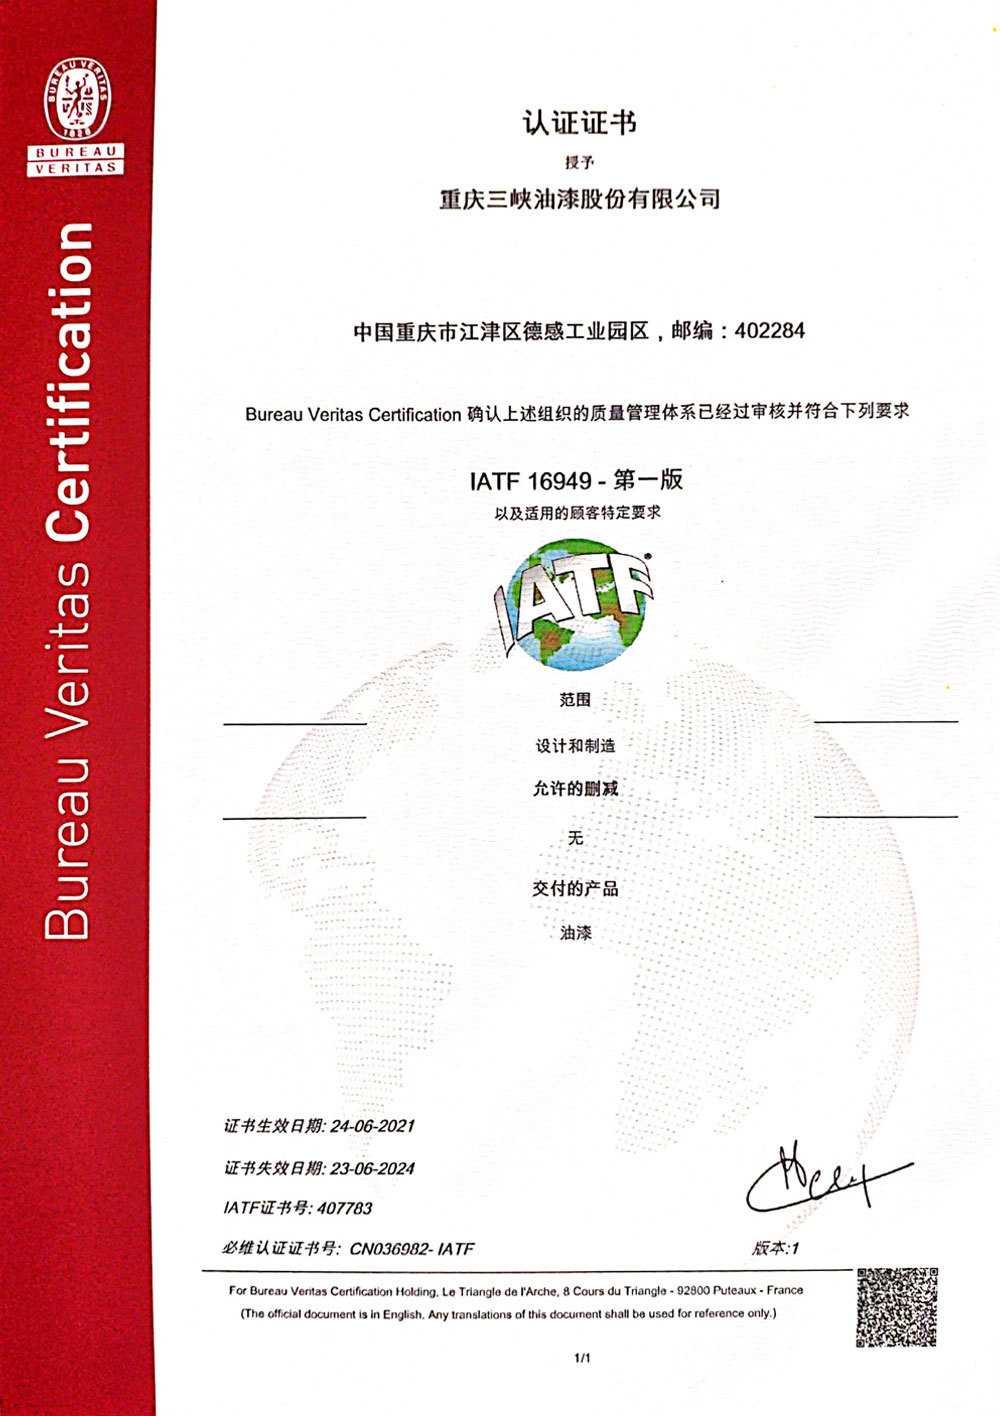 IATF16949 system certification